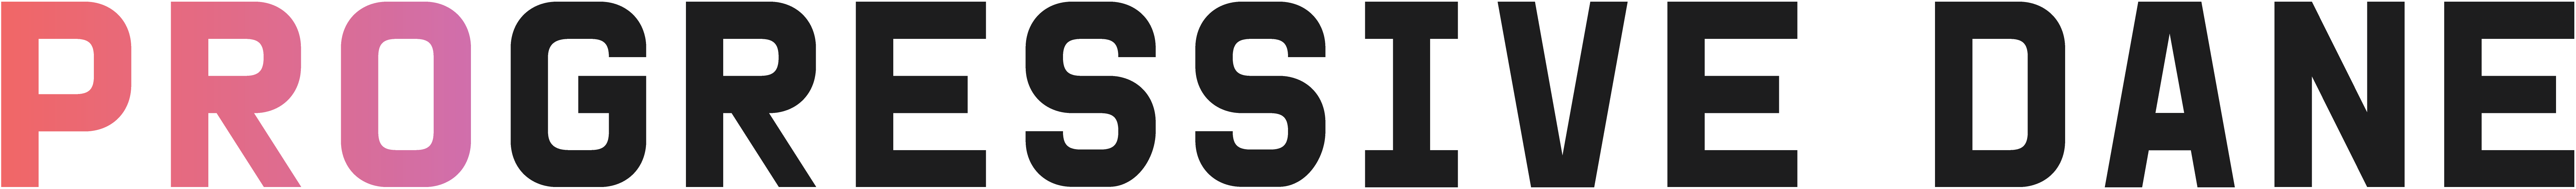 Progressive Dane logo